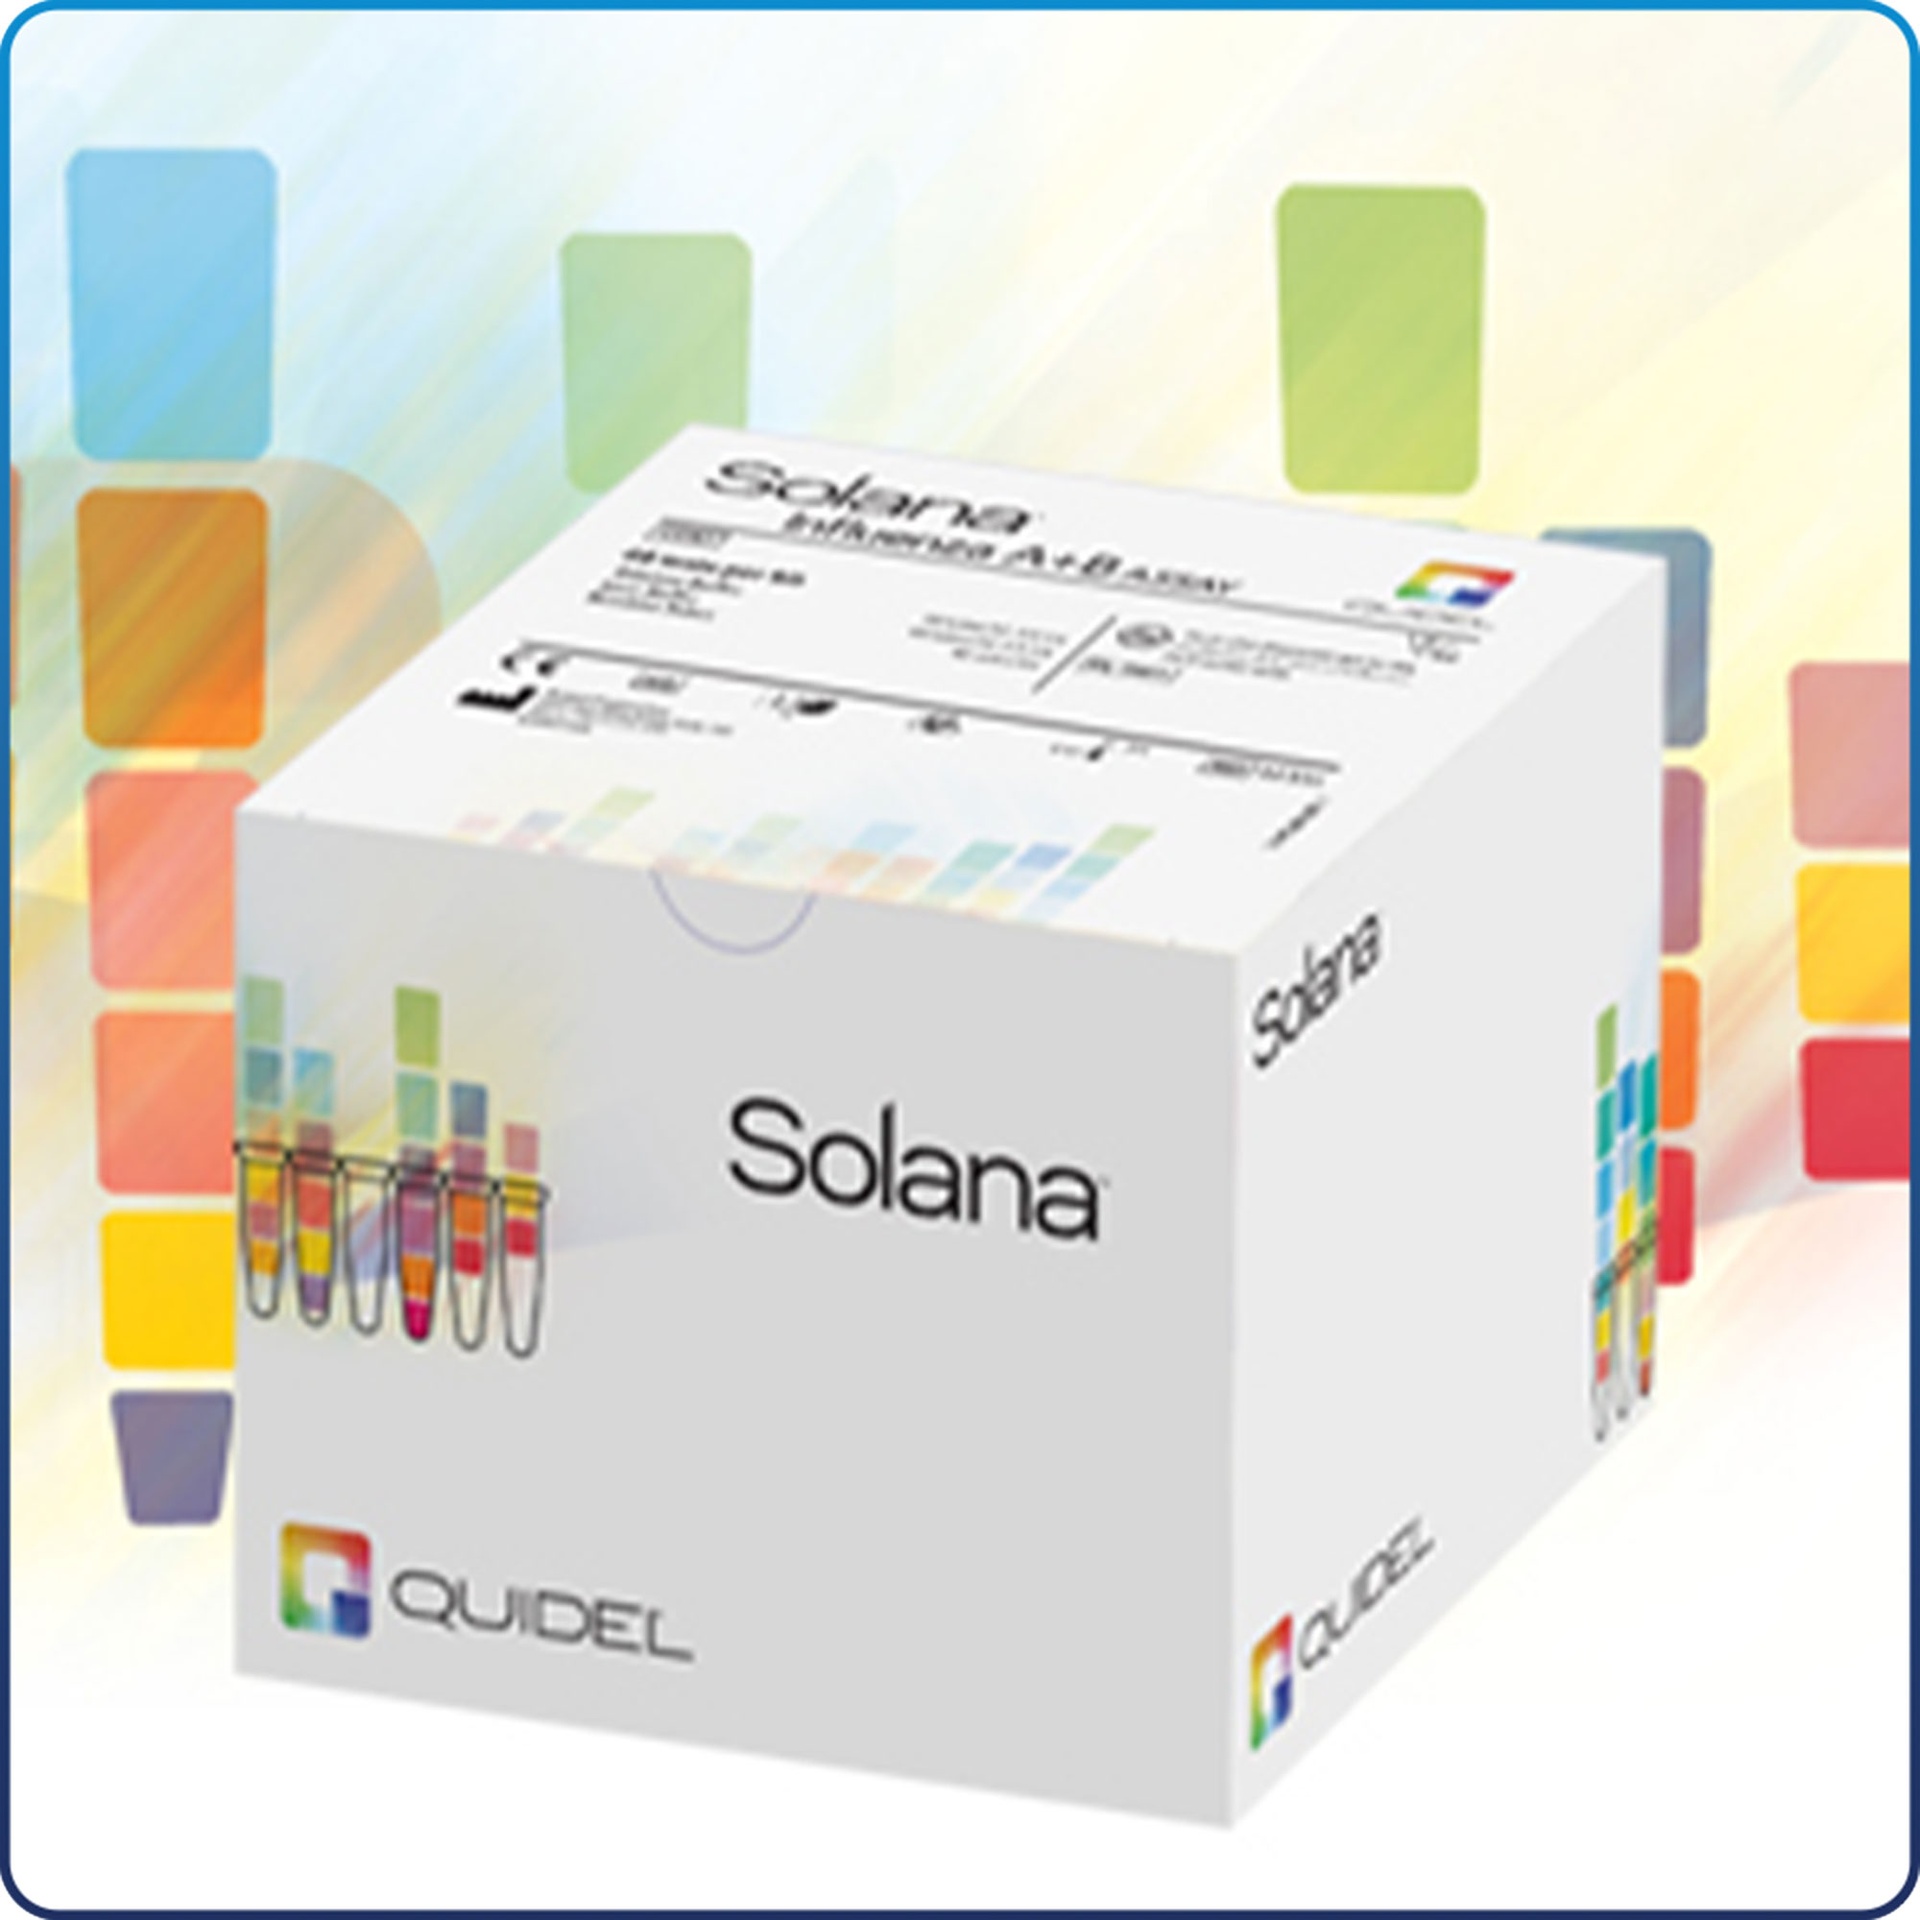 [M300] Solana Influenza A+B Assay Kit, 48 test/kt